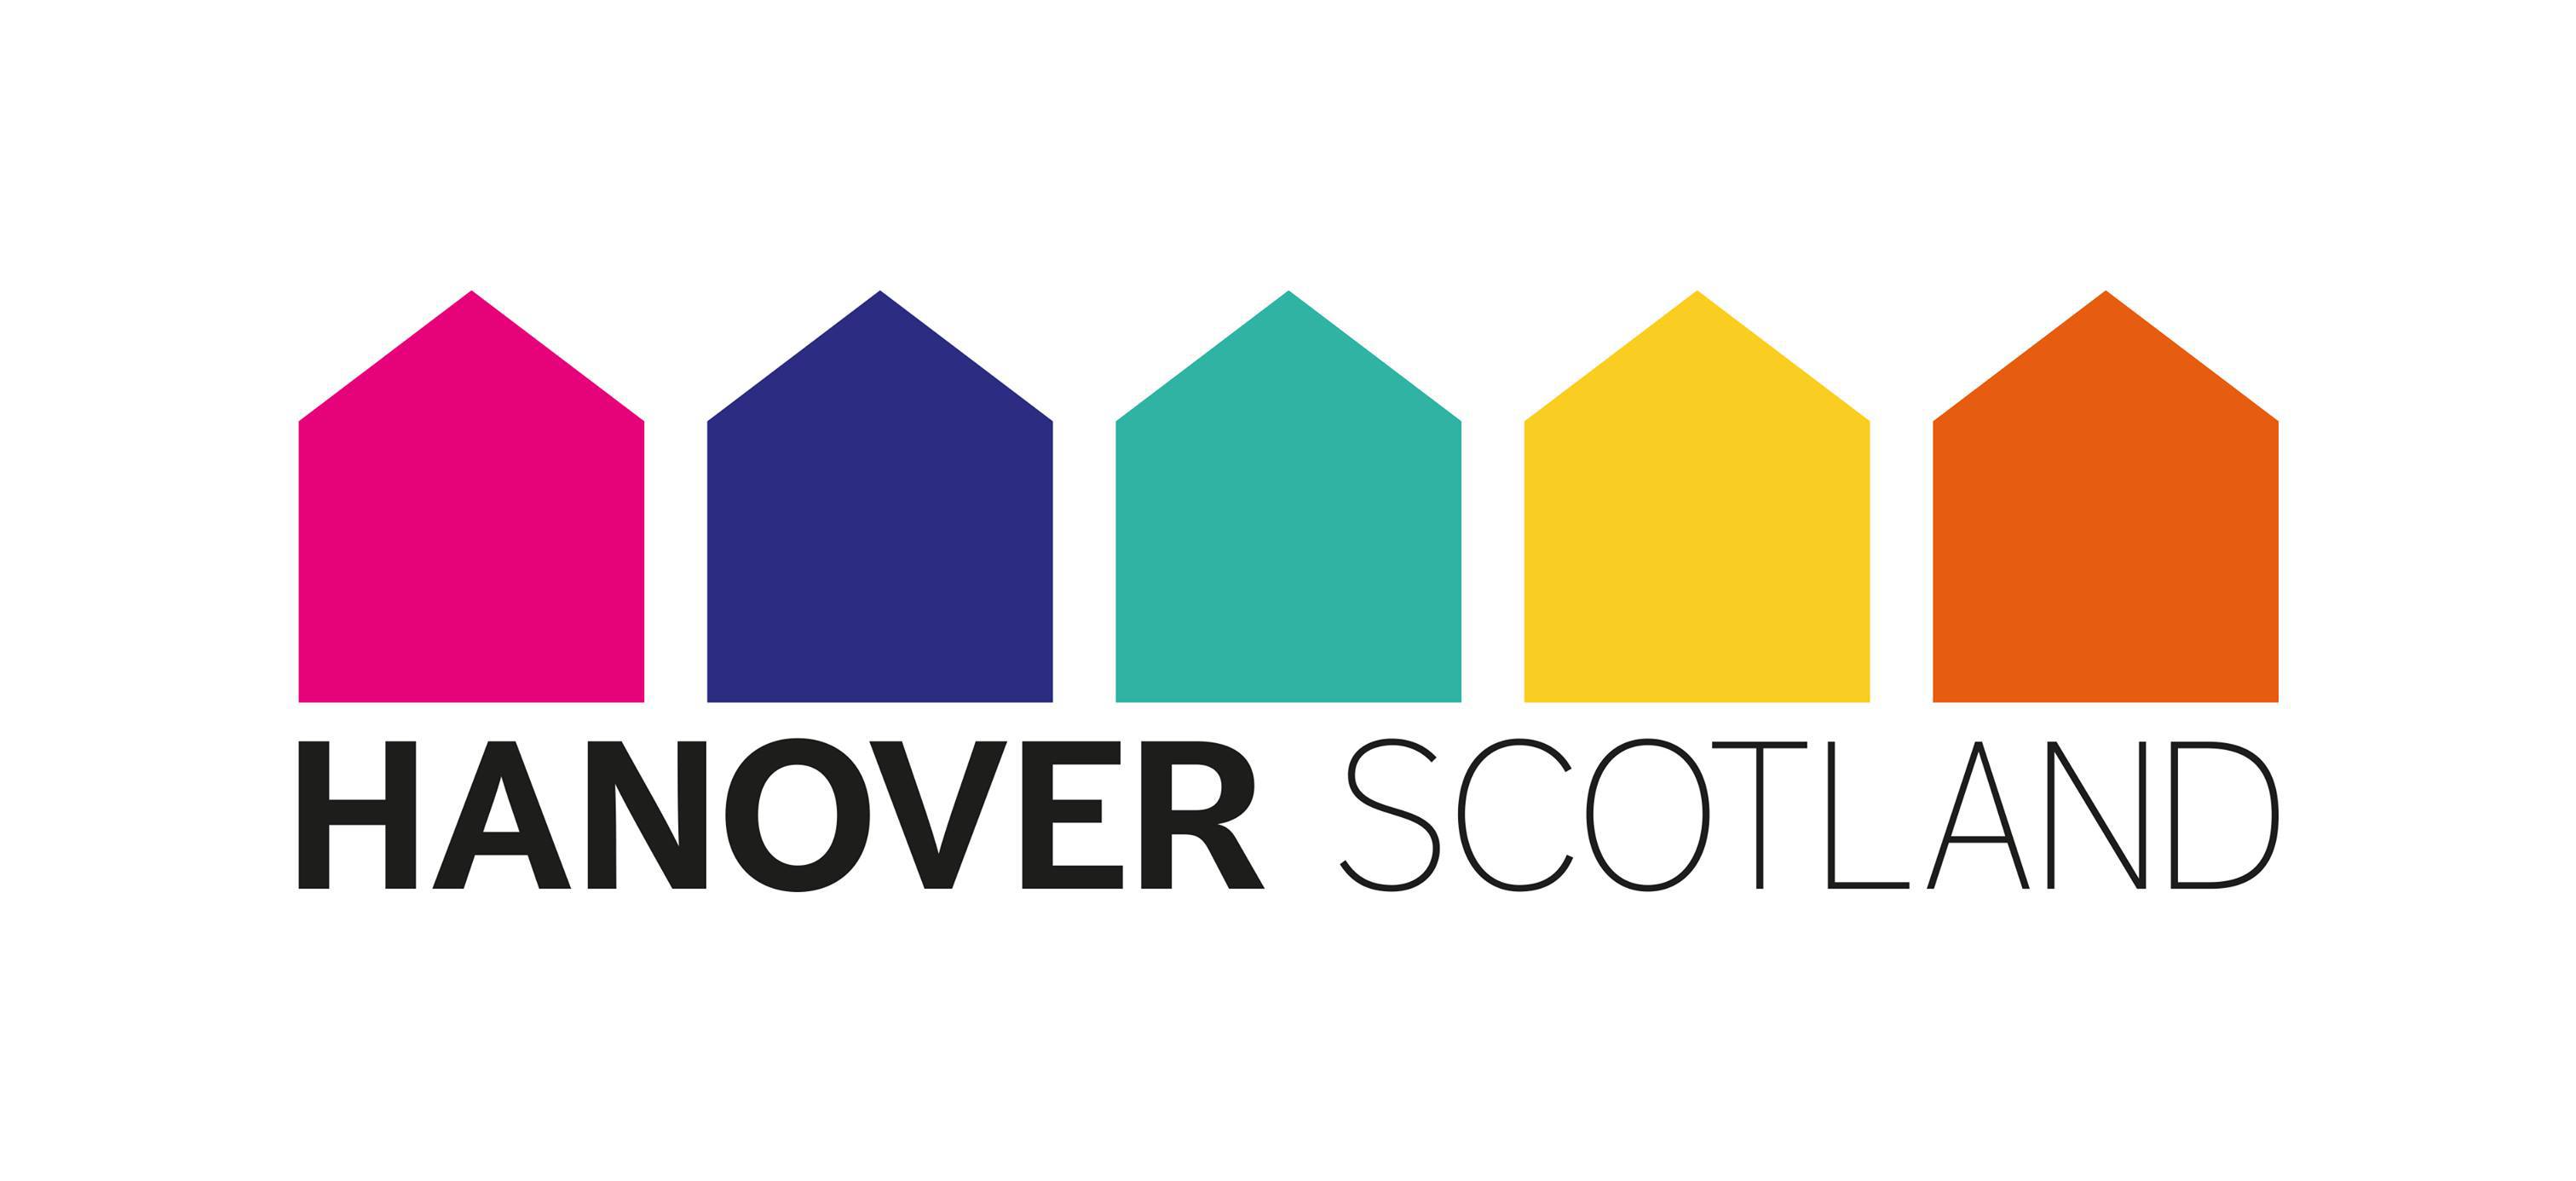 Hanover Logo - hanover logo Housing News